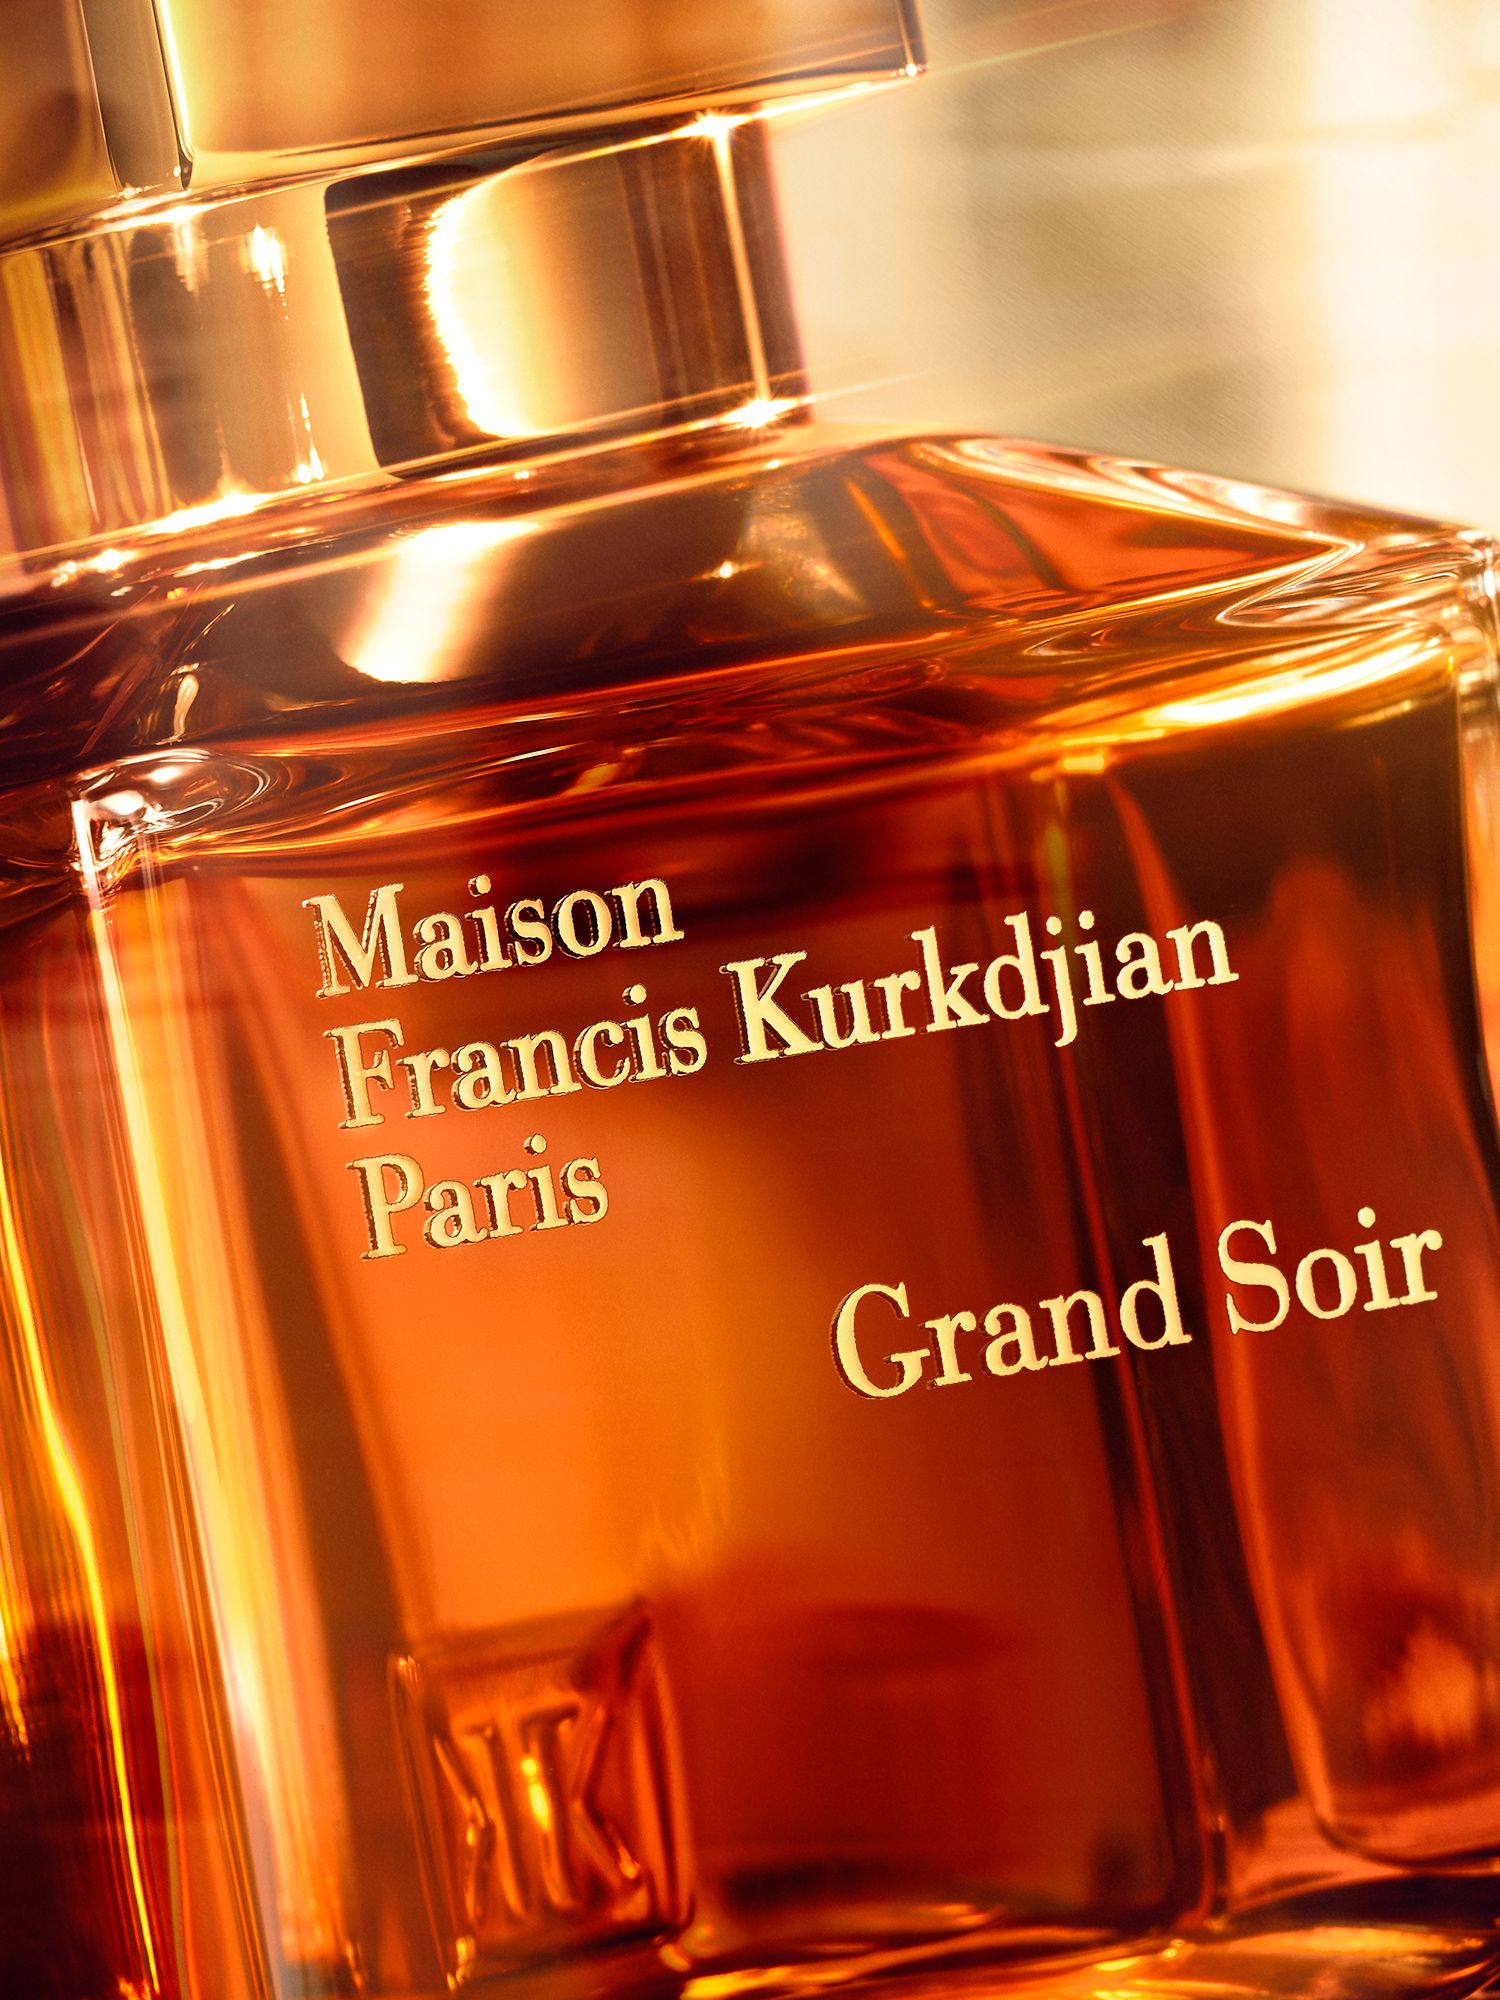 Maison Francis Kurkdjian Grand Soir Eau de Parfum, 70ml